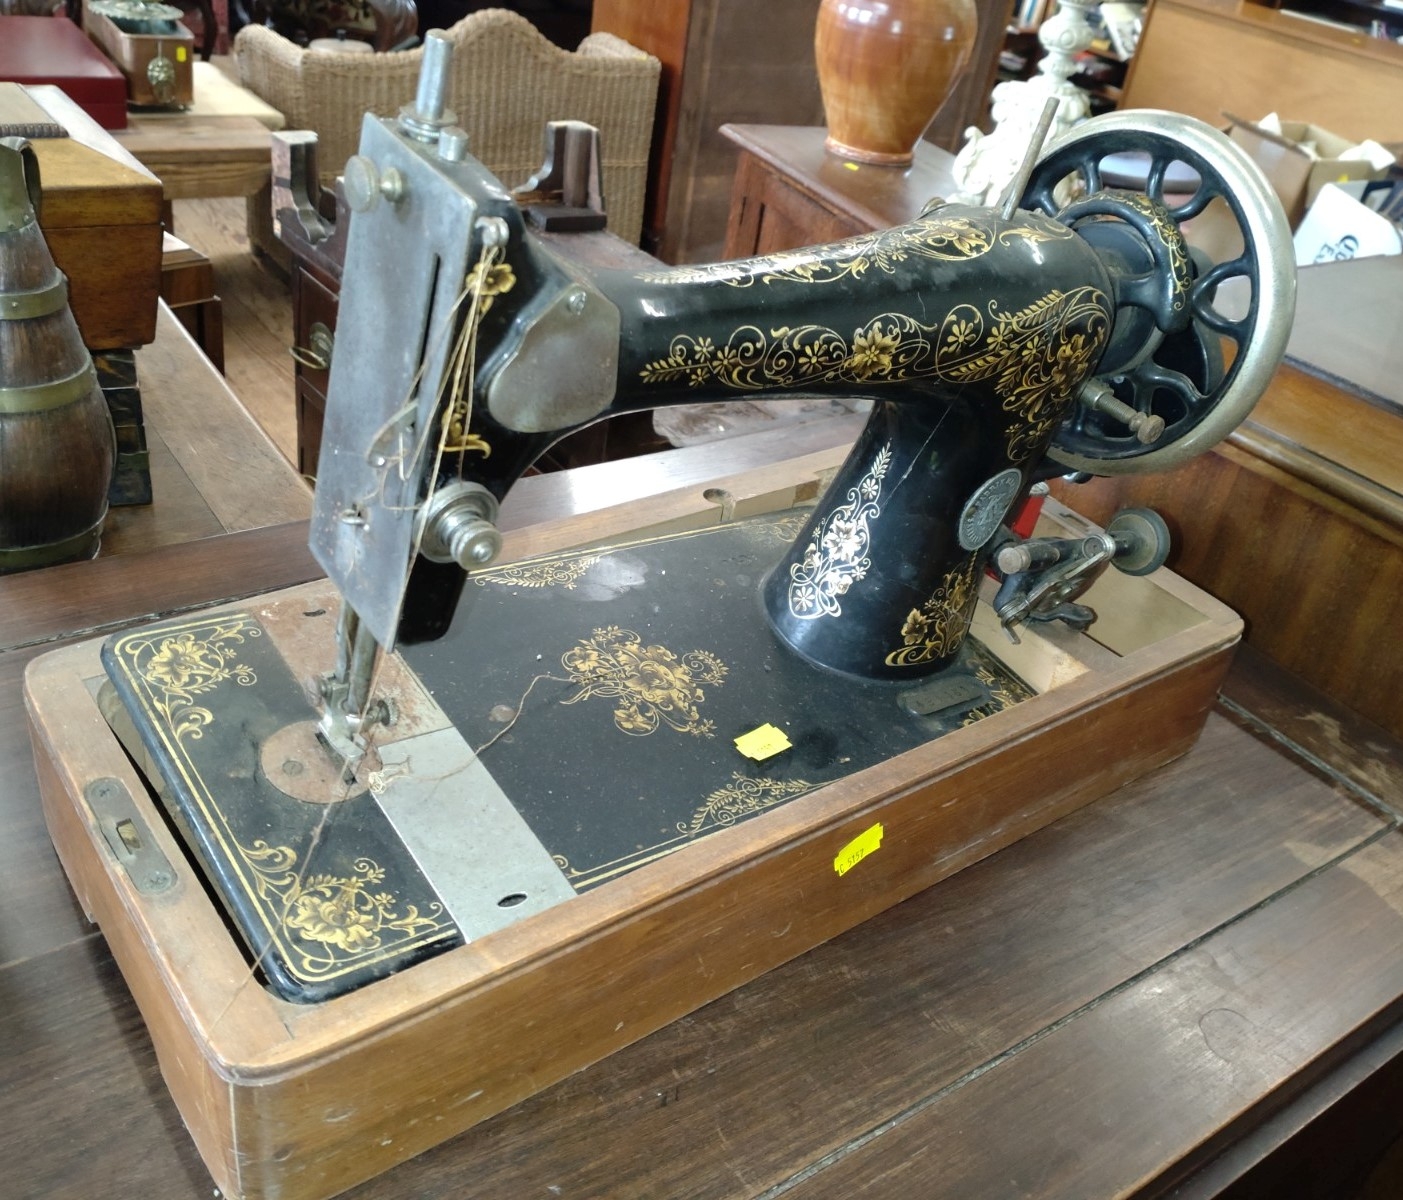 Antique sewing machine- no case